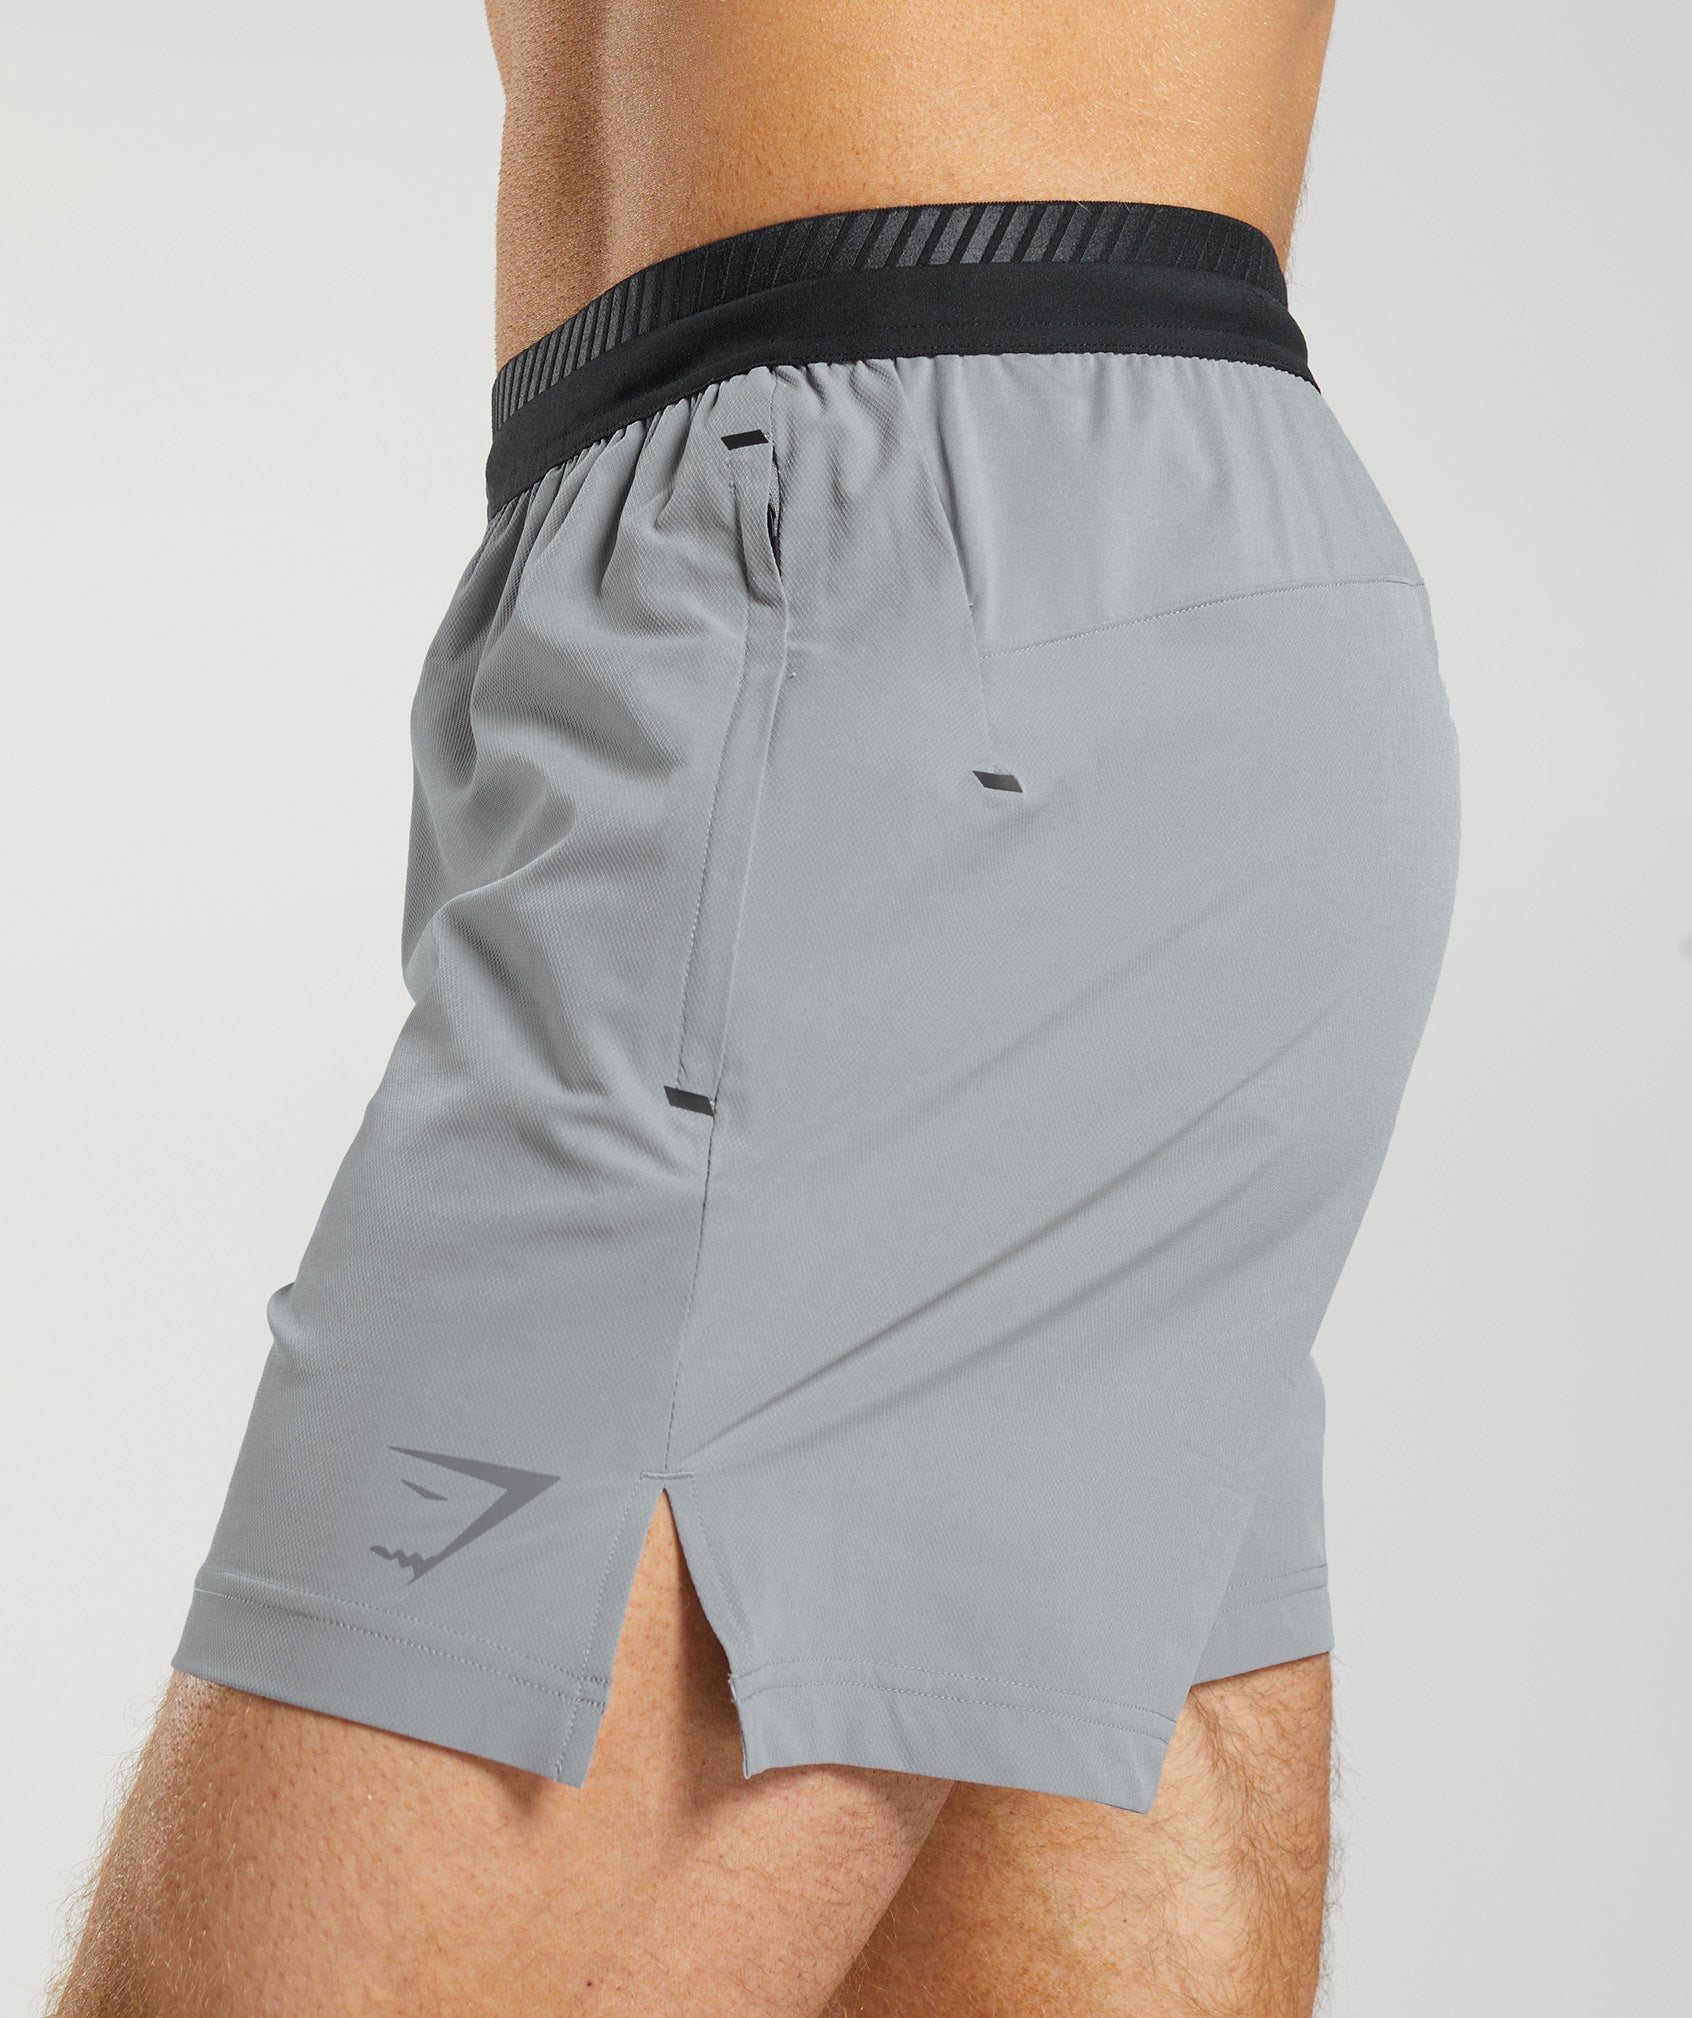 Apex 5" Hybrid Shorts in Drift Grey - view 5